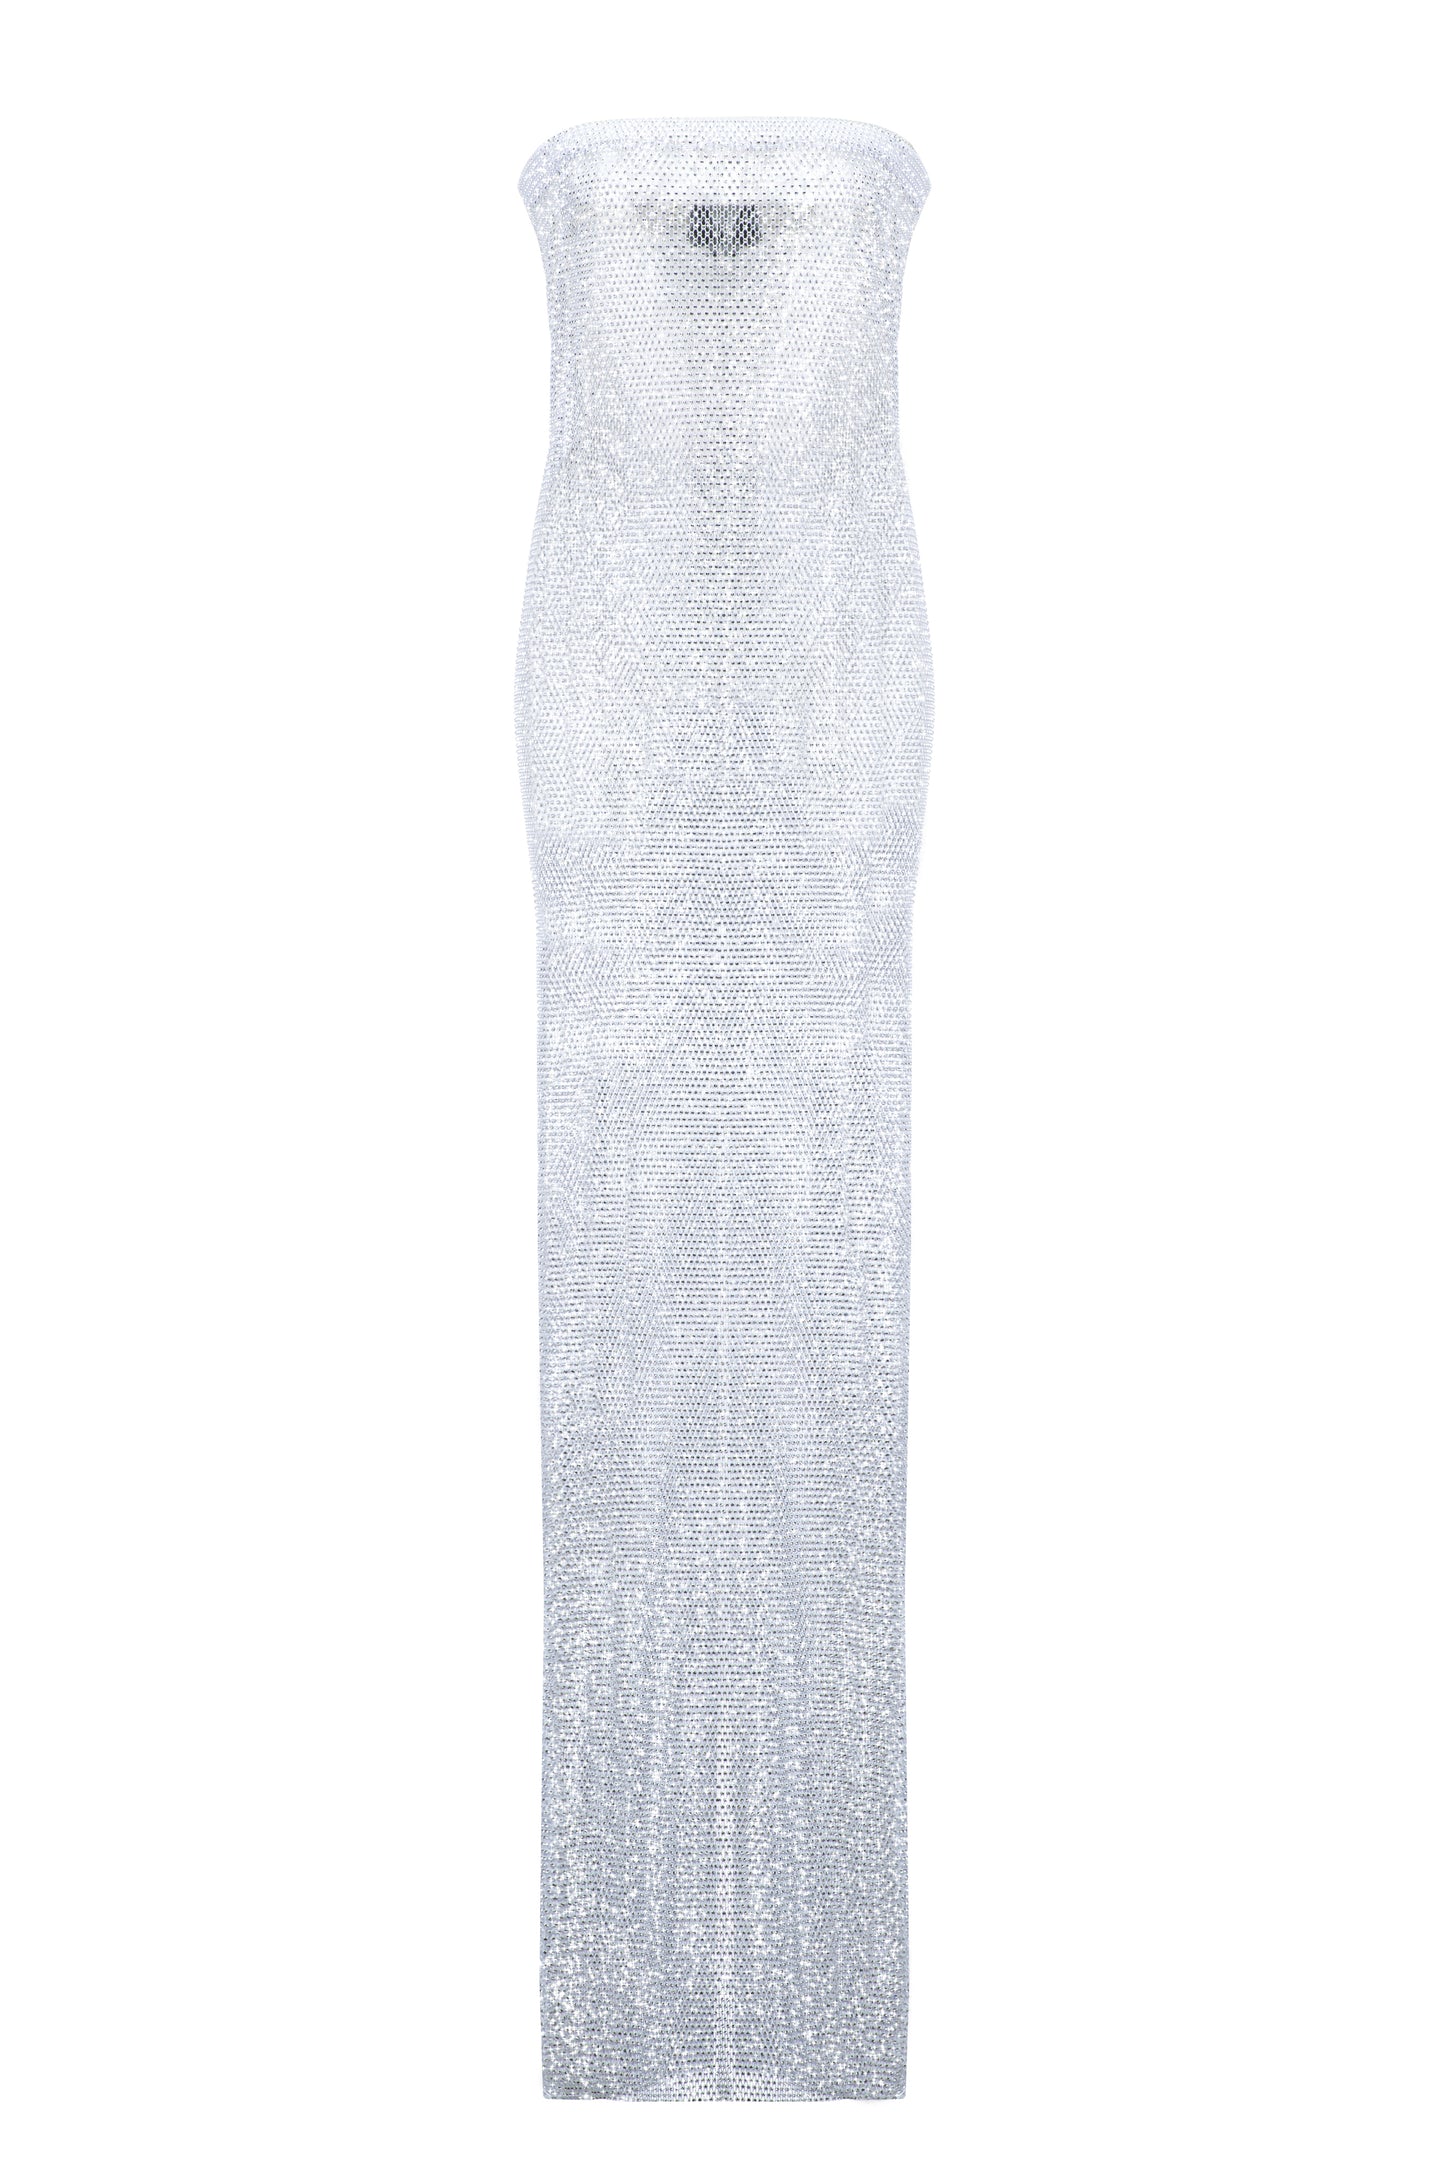 SANTA Sparkle Maxi Dress with Open Shoulders - White front